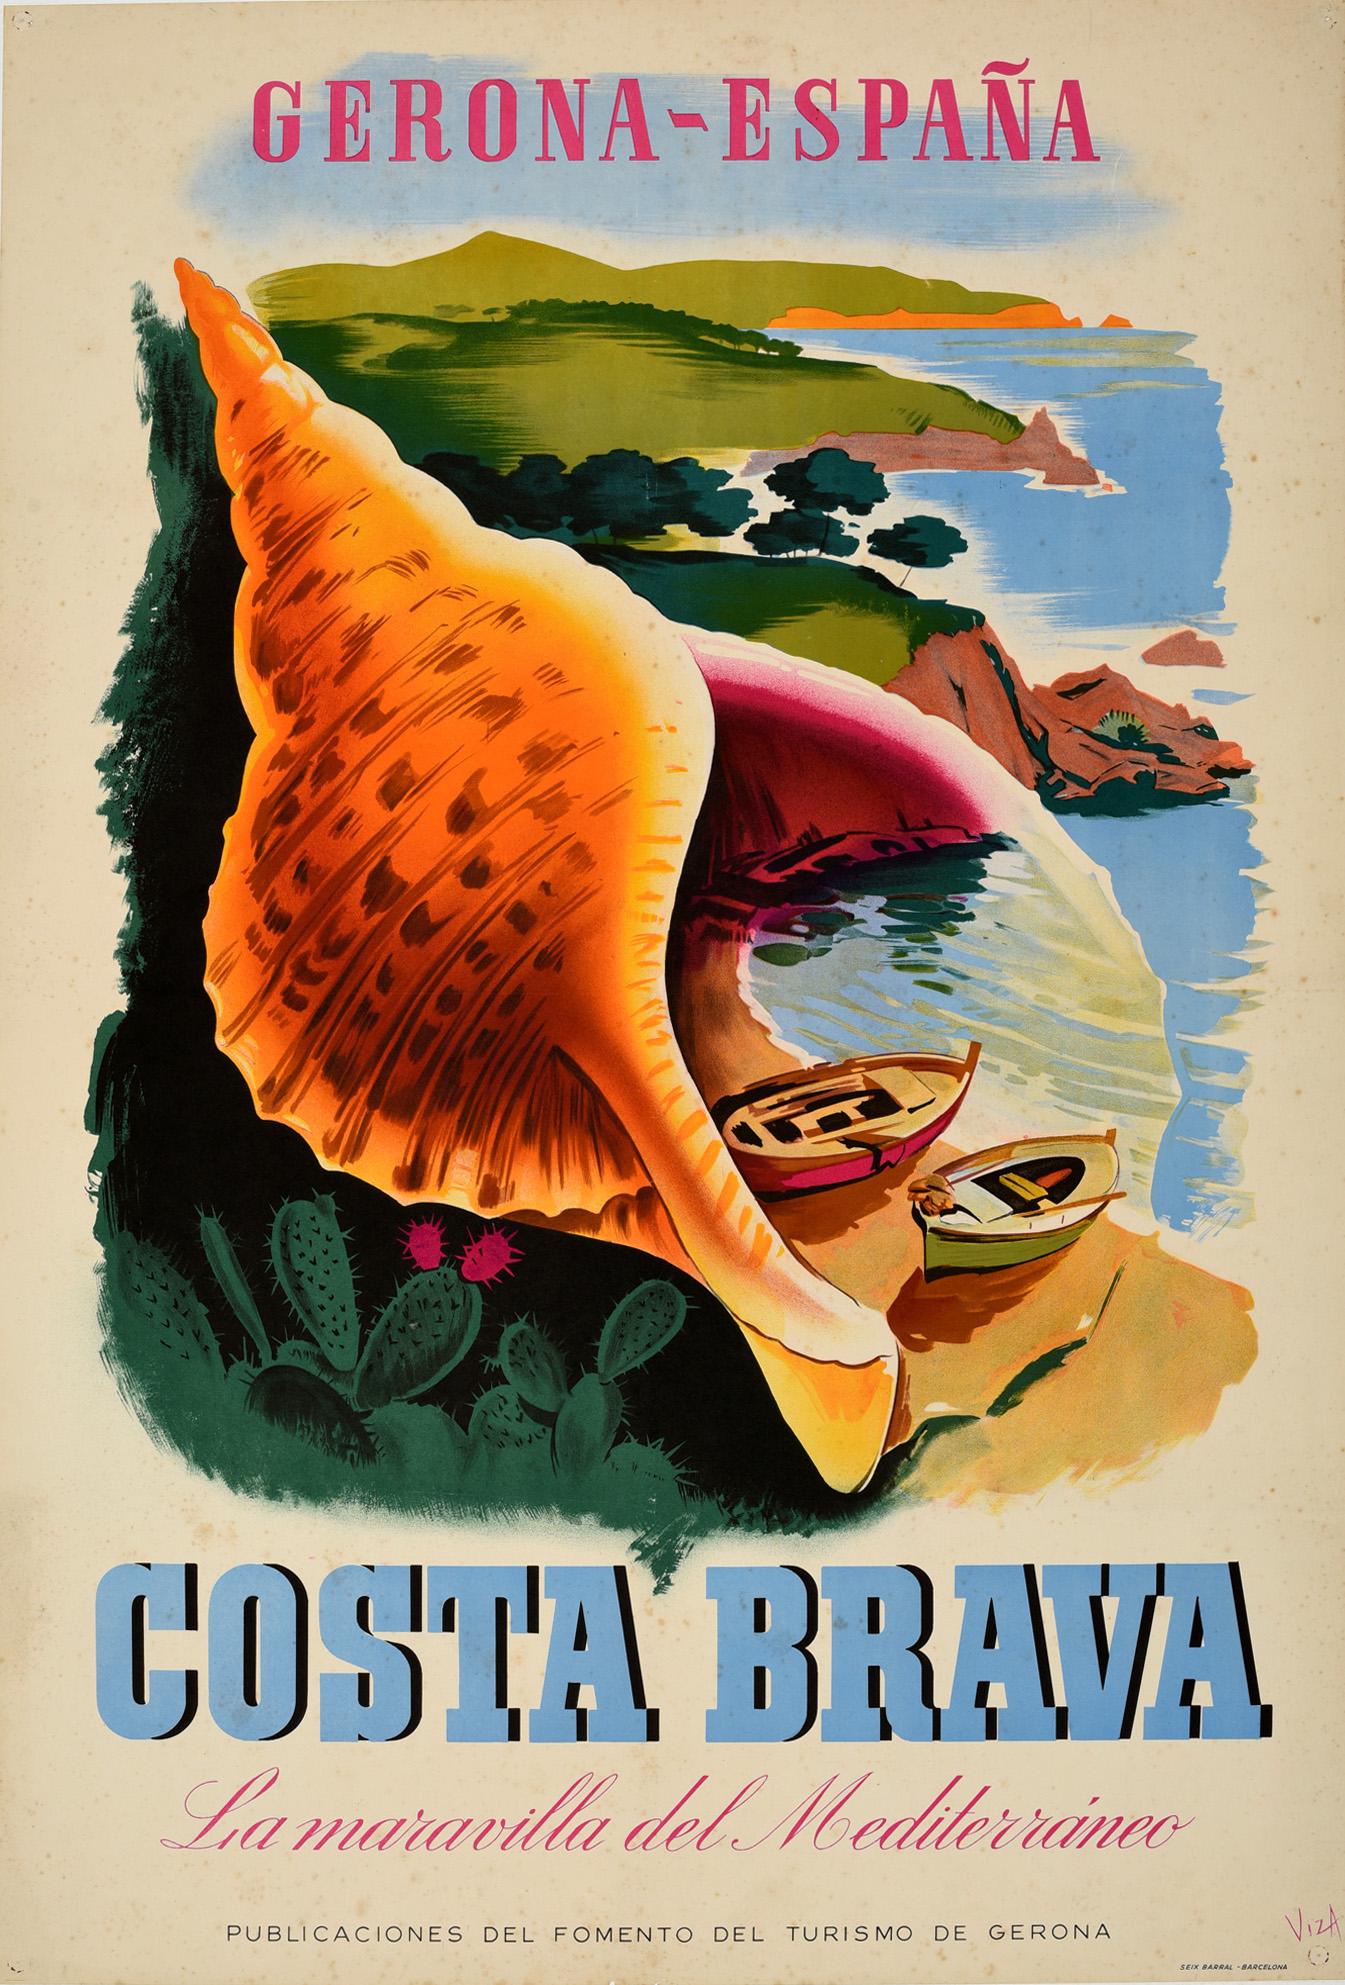 Viza Print - Original Vintage Travel Poster For Gerona Espana Mediterranean Costa Brava Spain